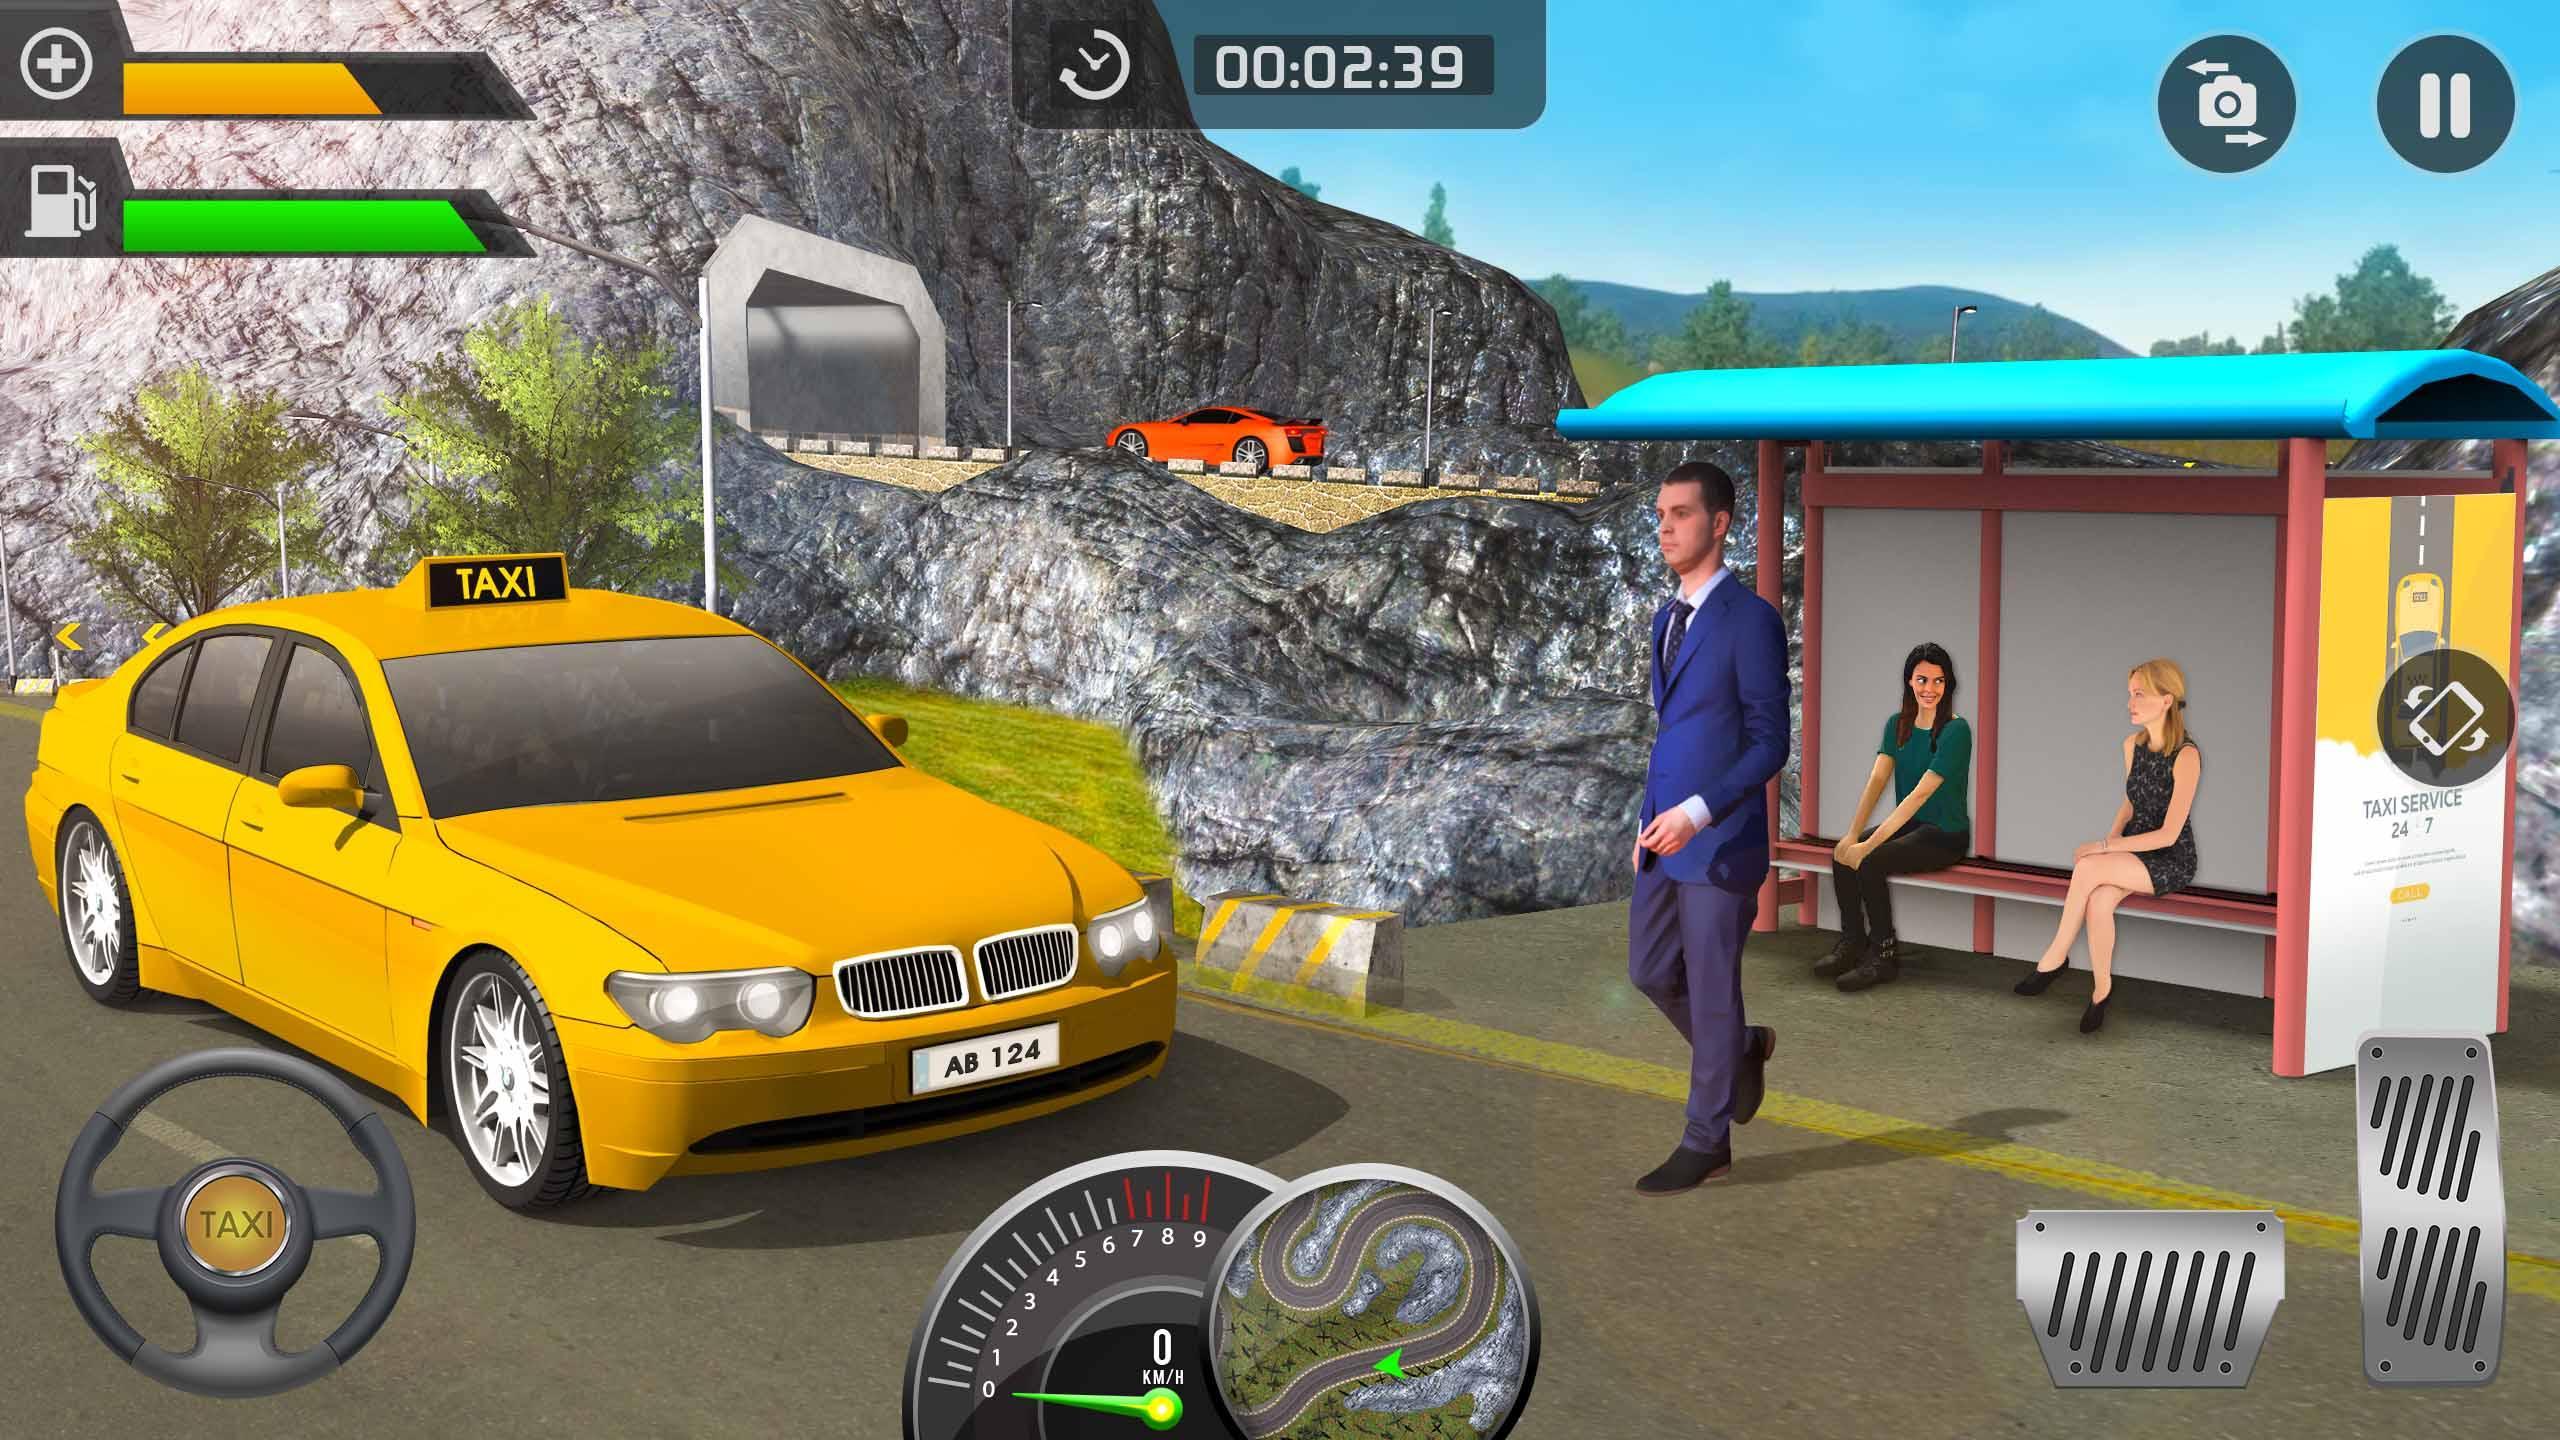 Modern Taxi Drive Parking 3D Game: Taxi Games 2020 1.1.06 Screenshot 7